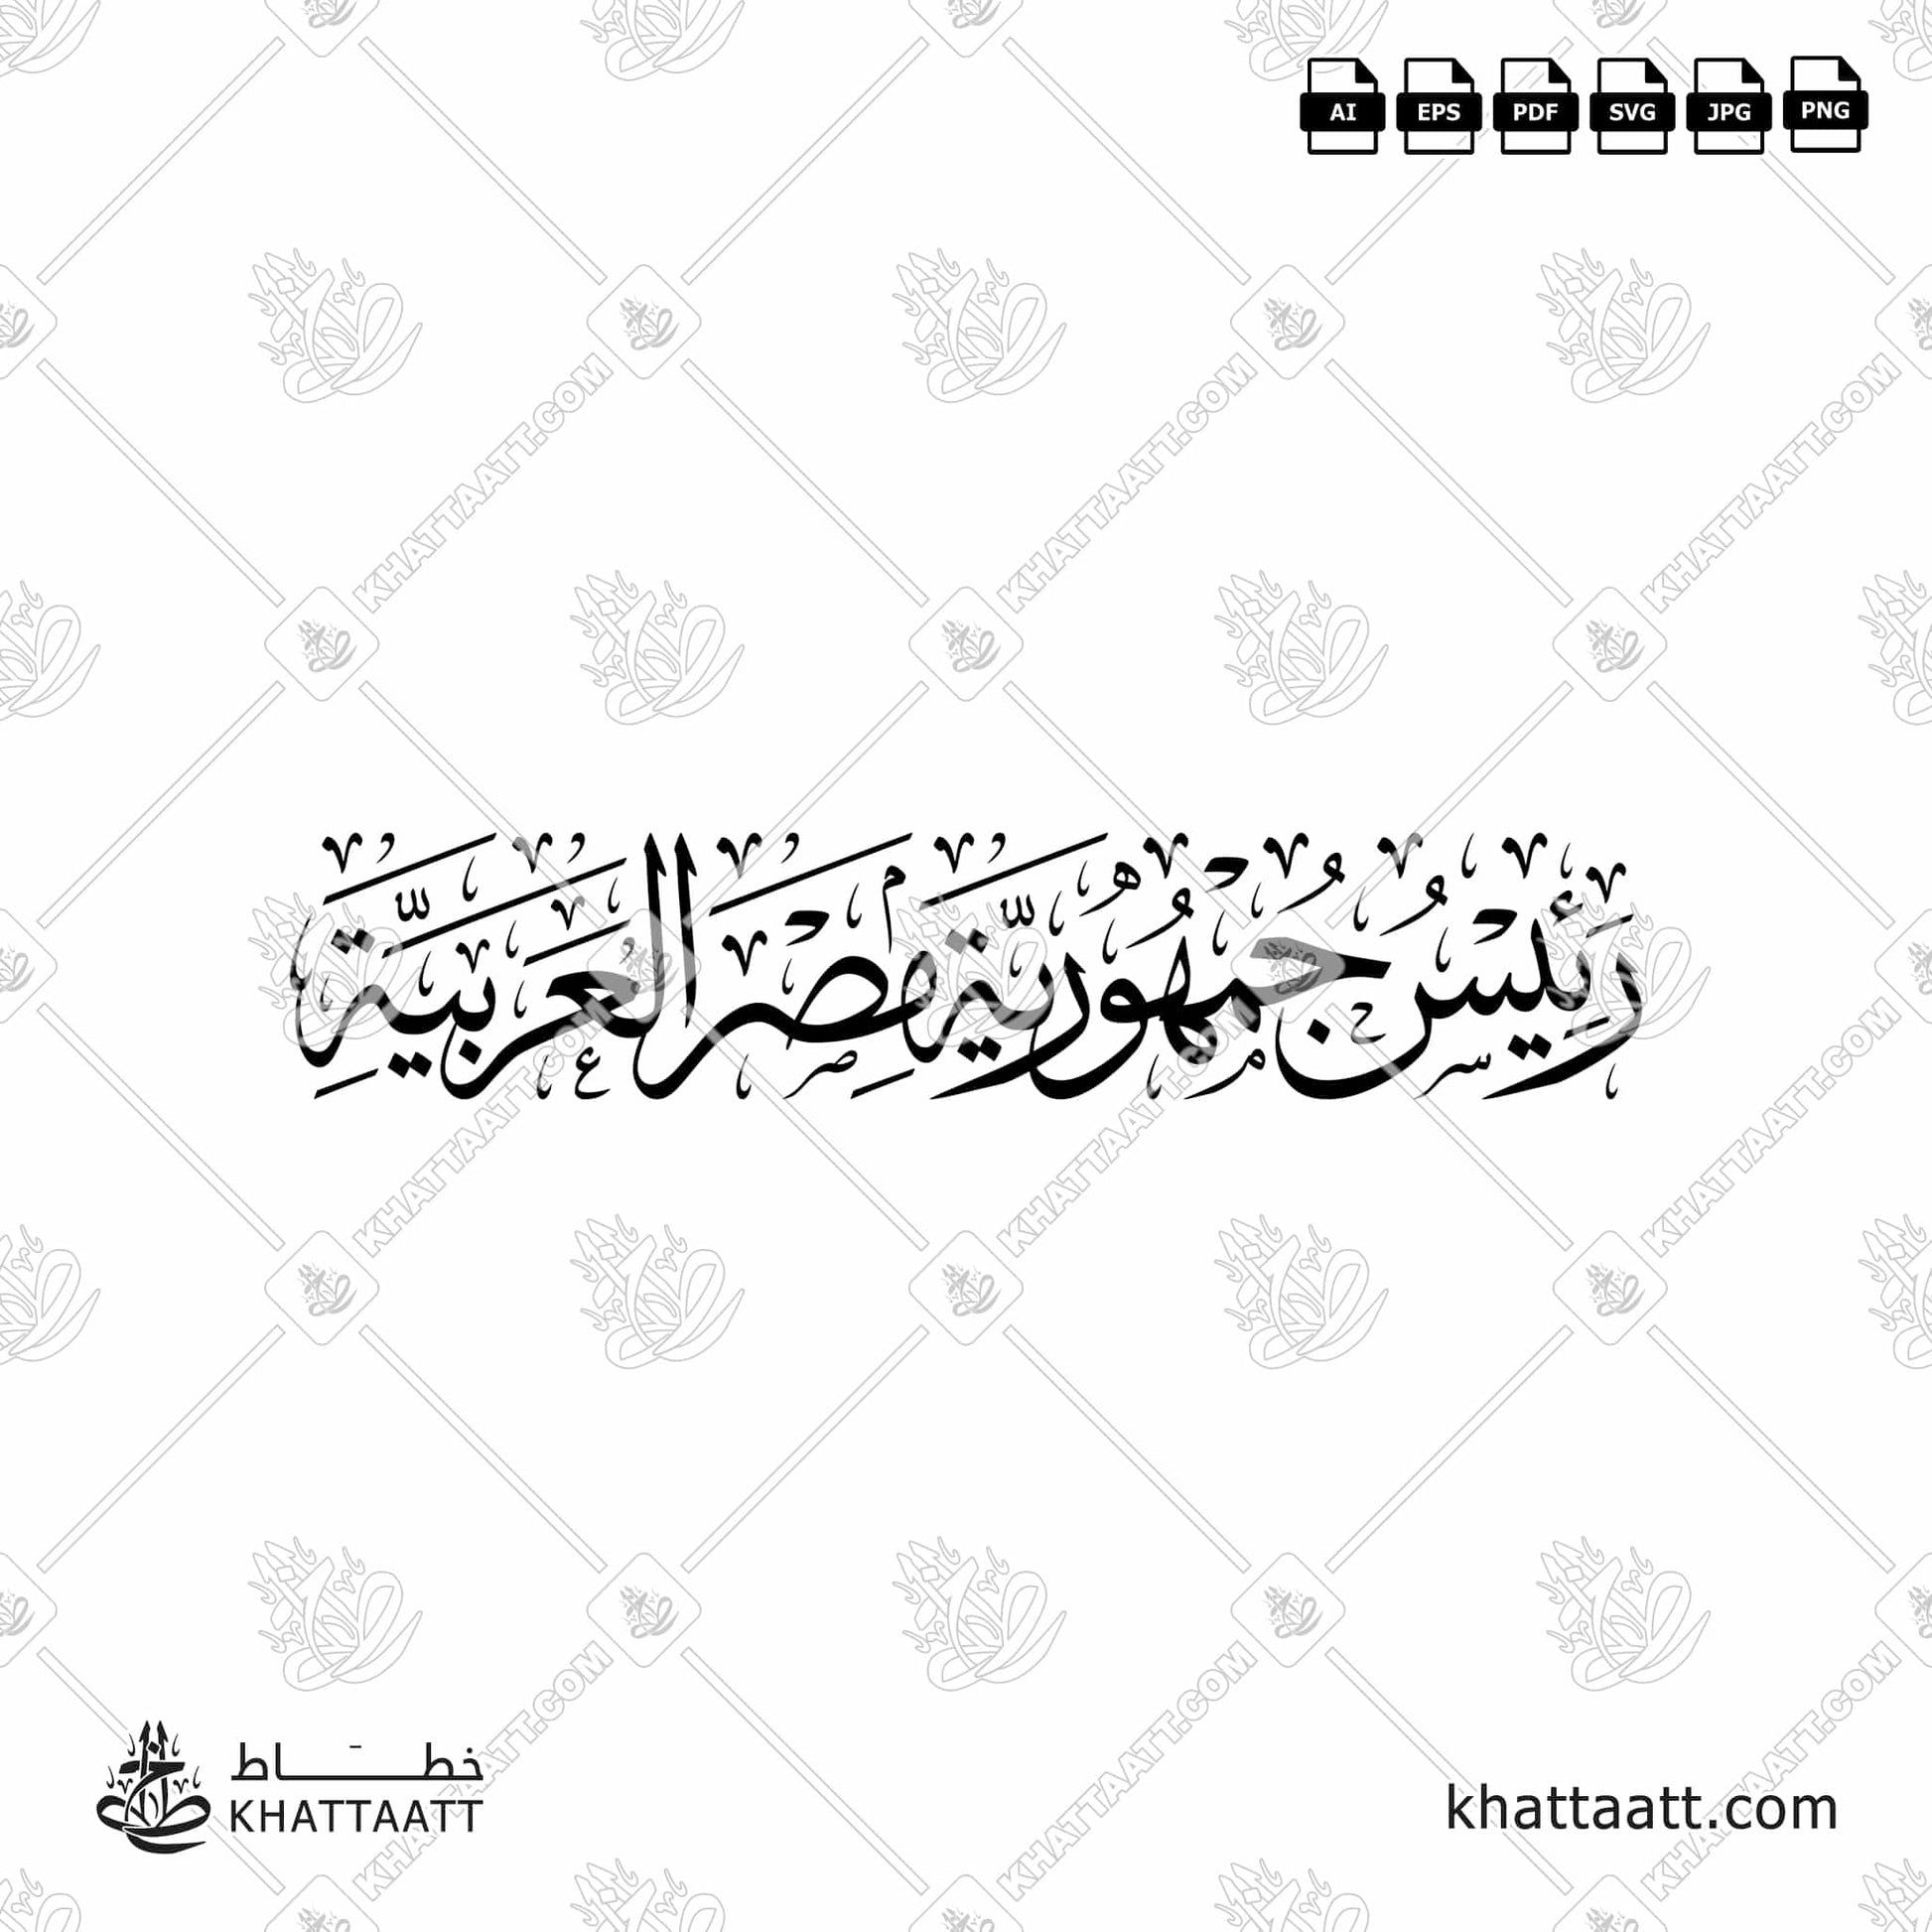 Download Arabic calligraphy تحميل مخطوطة خط عربي of رئيس جمهورية مصر العربية (T011) Thuluth - خط الثلث in vector فيكتور and png